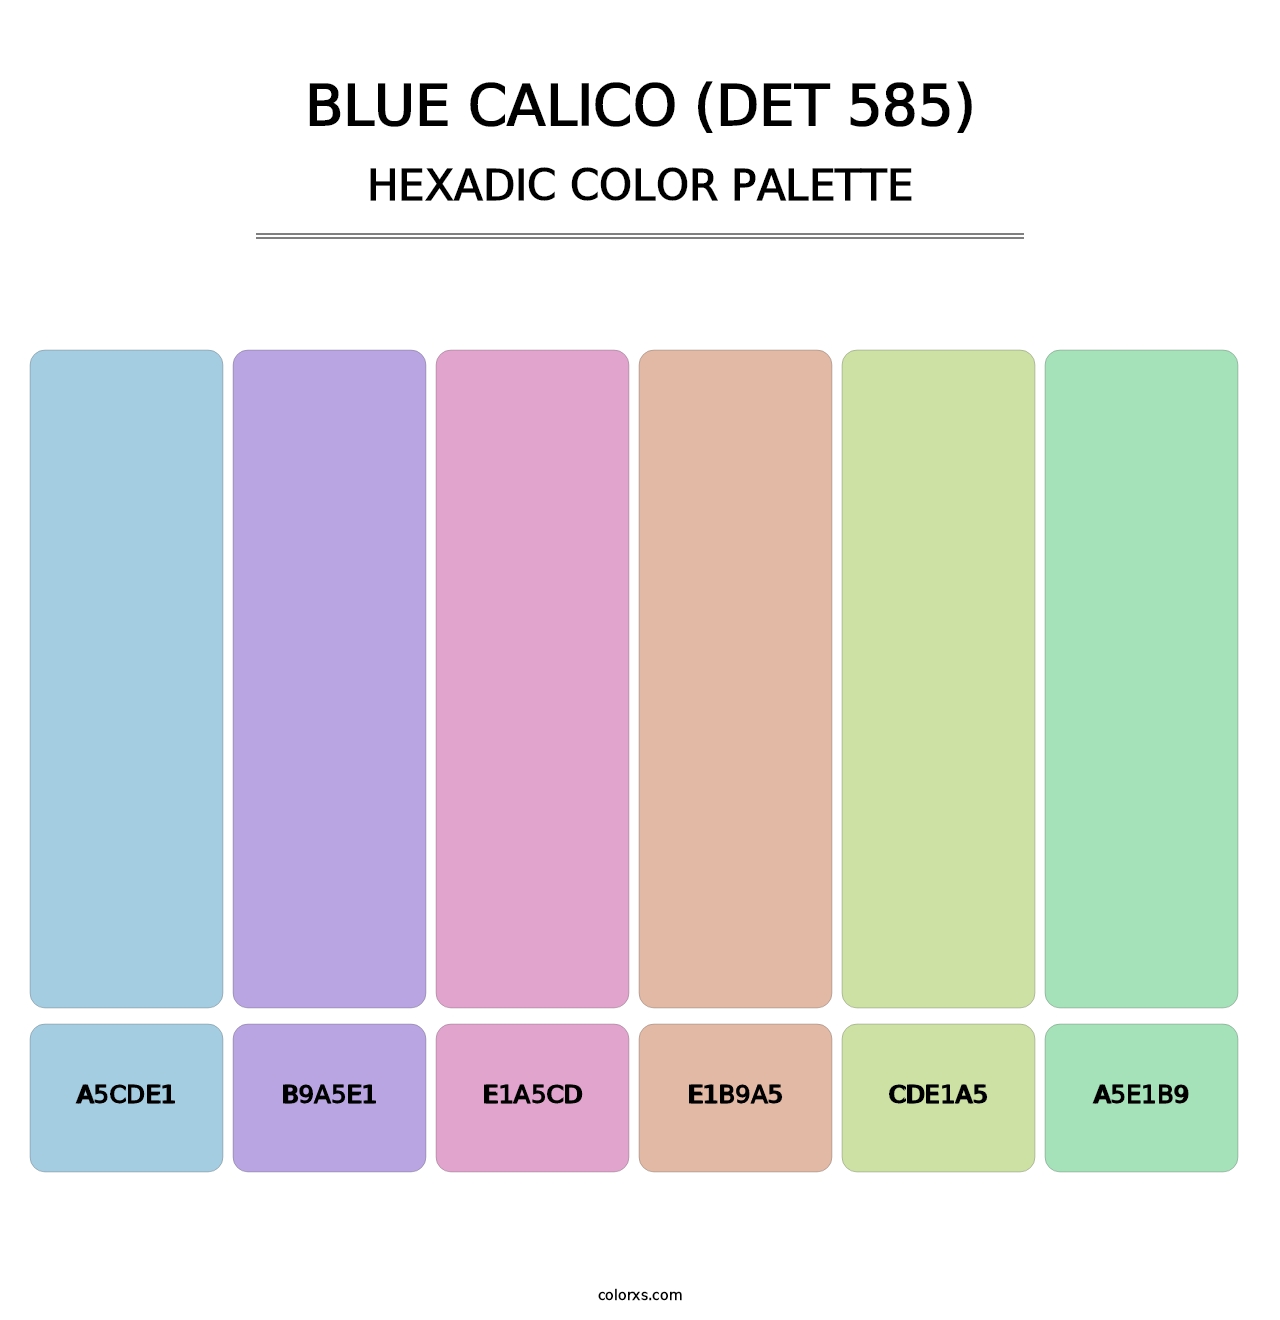 Blue Calico (DET 585) - Hexadic Color Palette